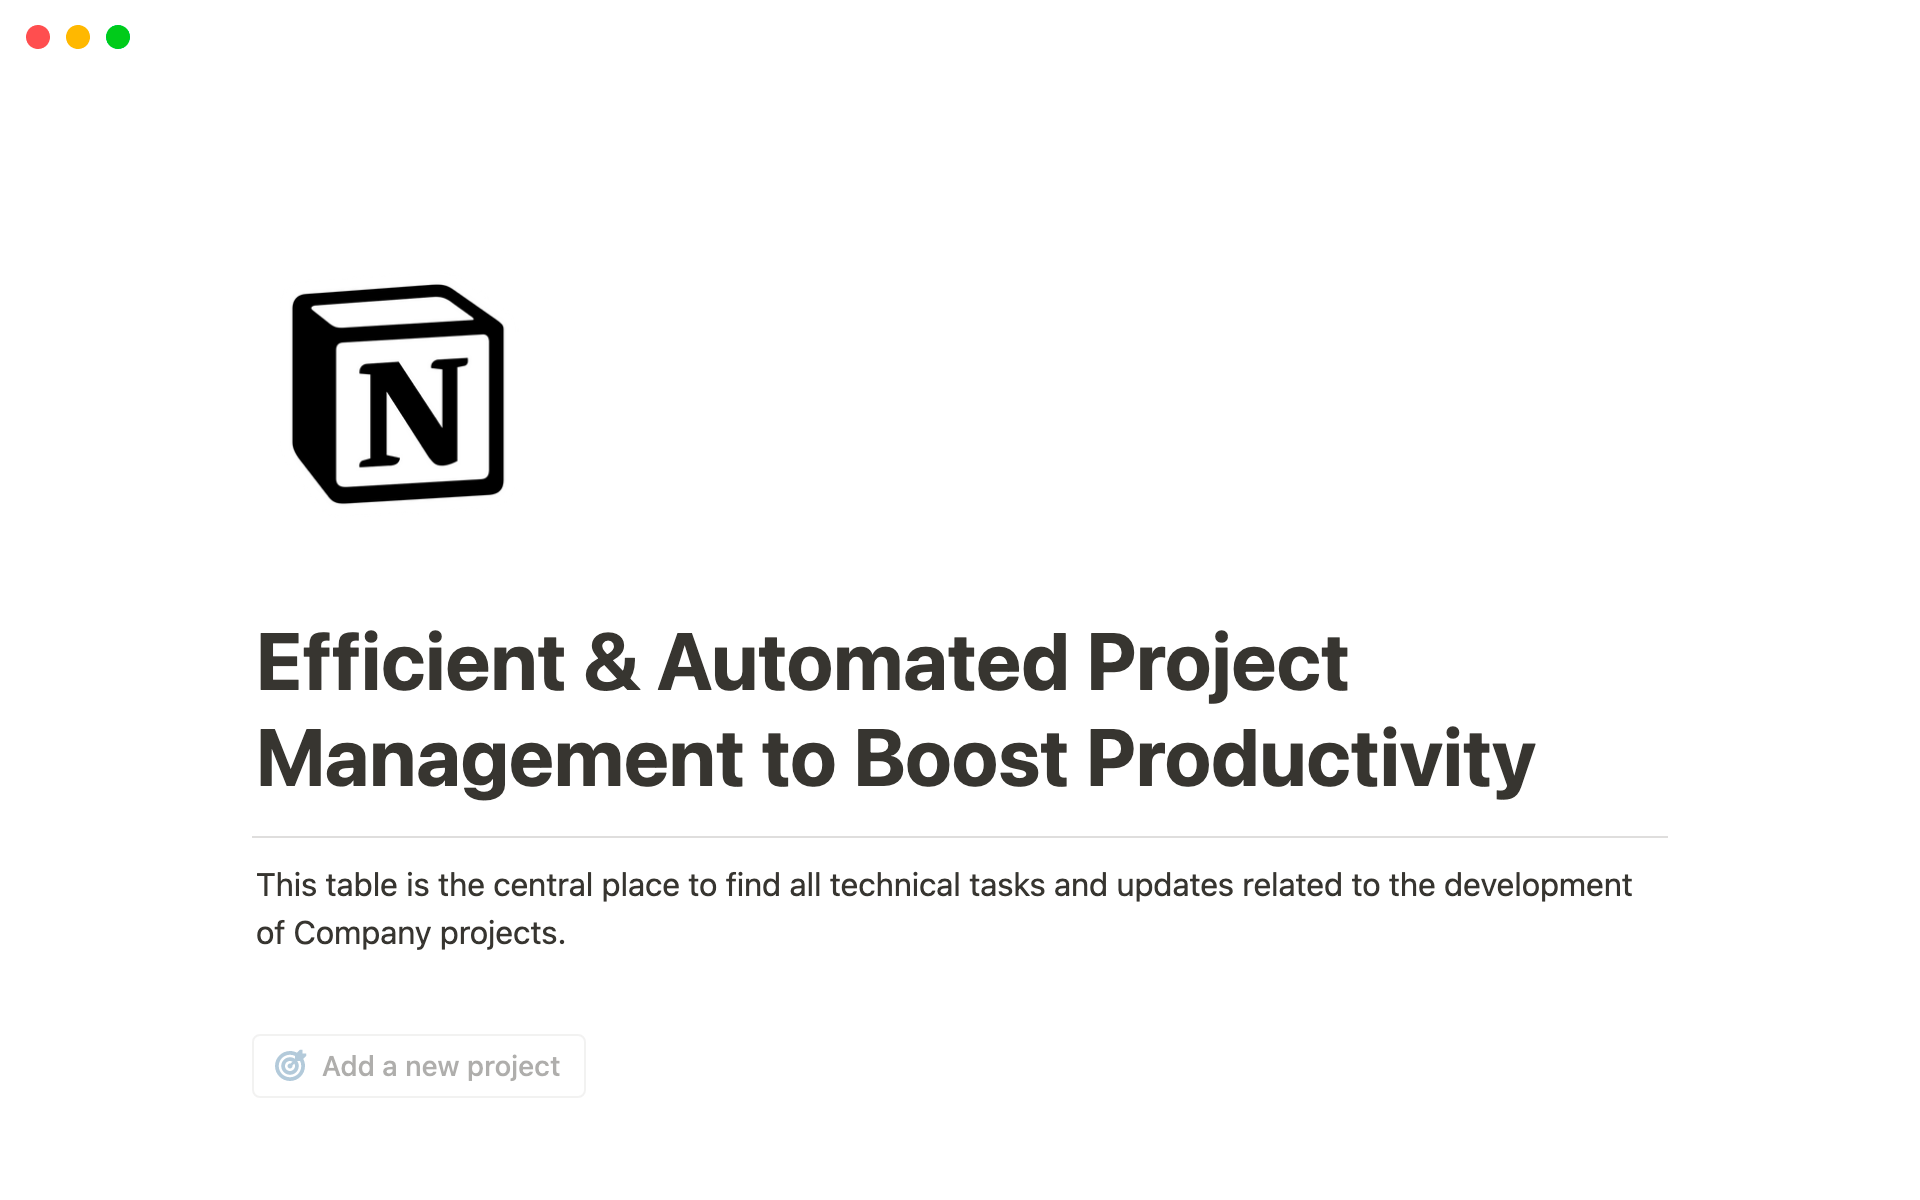 Vista previa de plantilla para Efficient & Automated Project Management to Boost Productivity